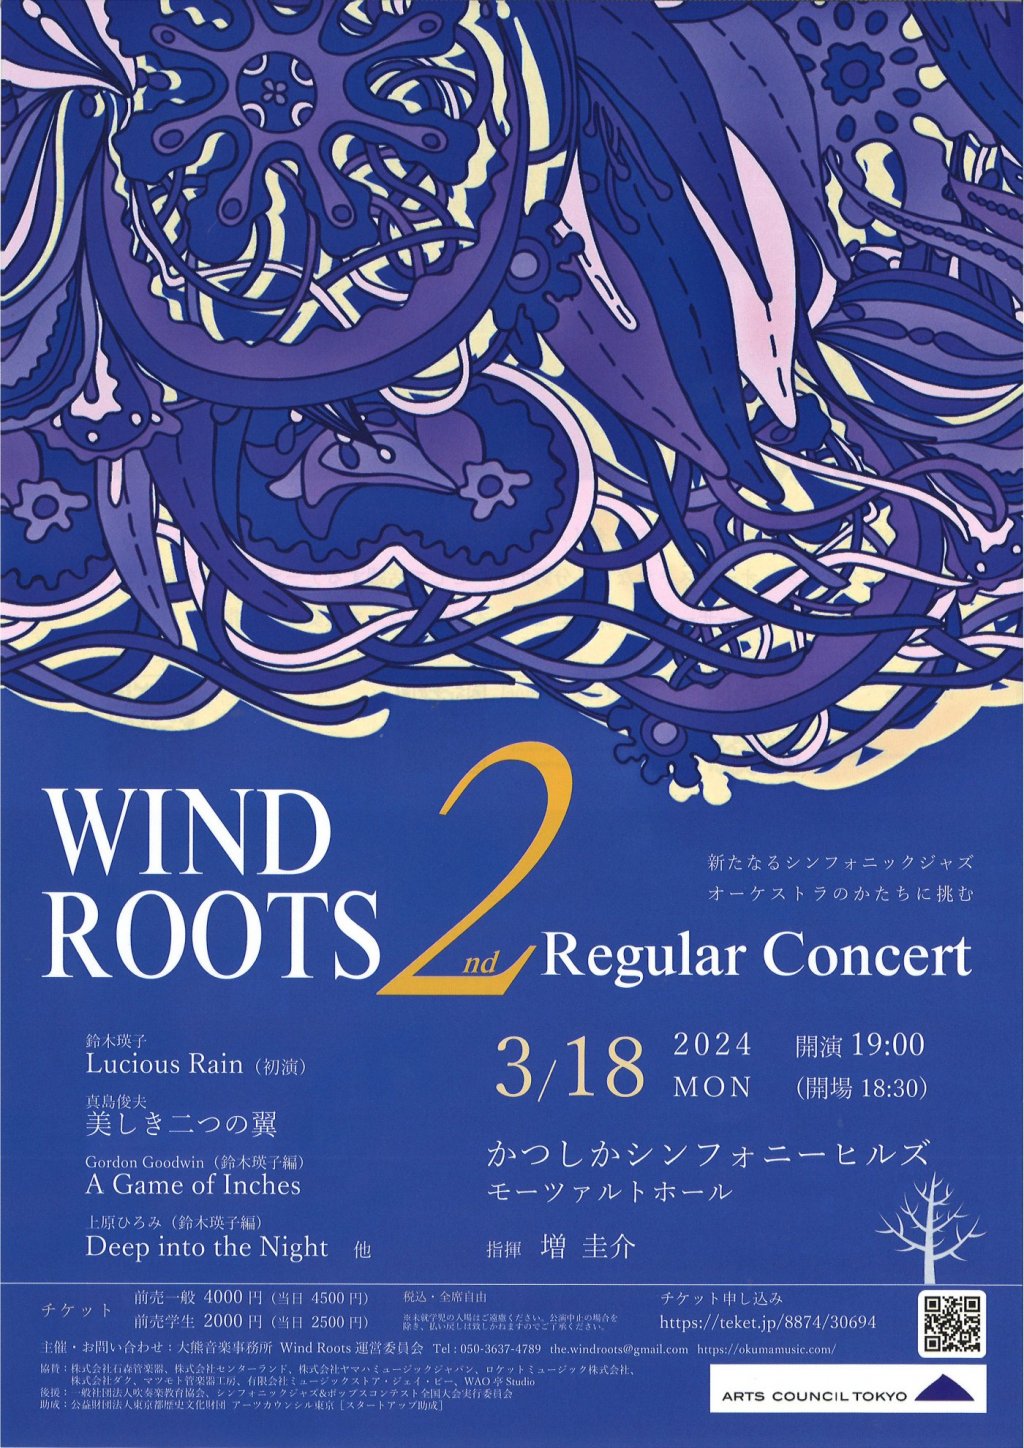 WIND ROOTS 2nd Regular Concert